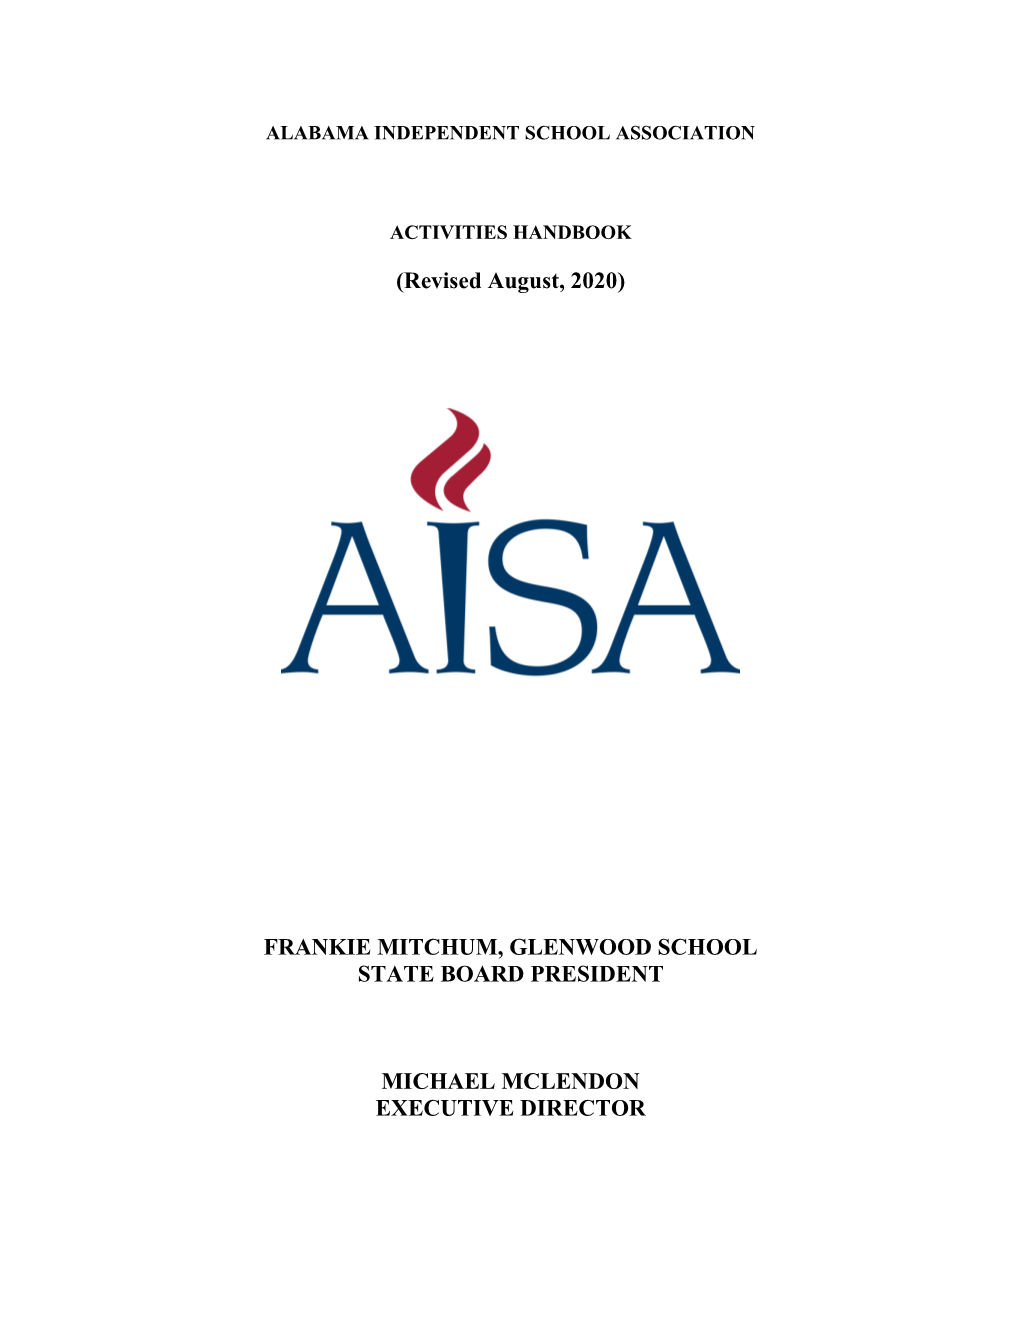 Alabama Independent School Association Activities Handbook